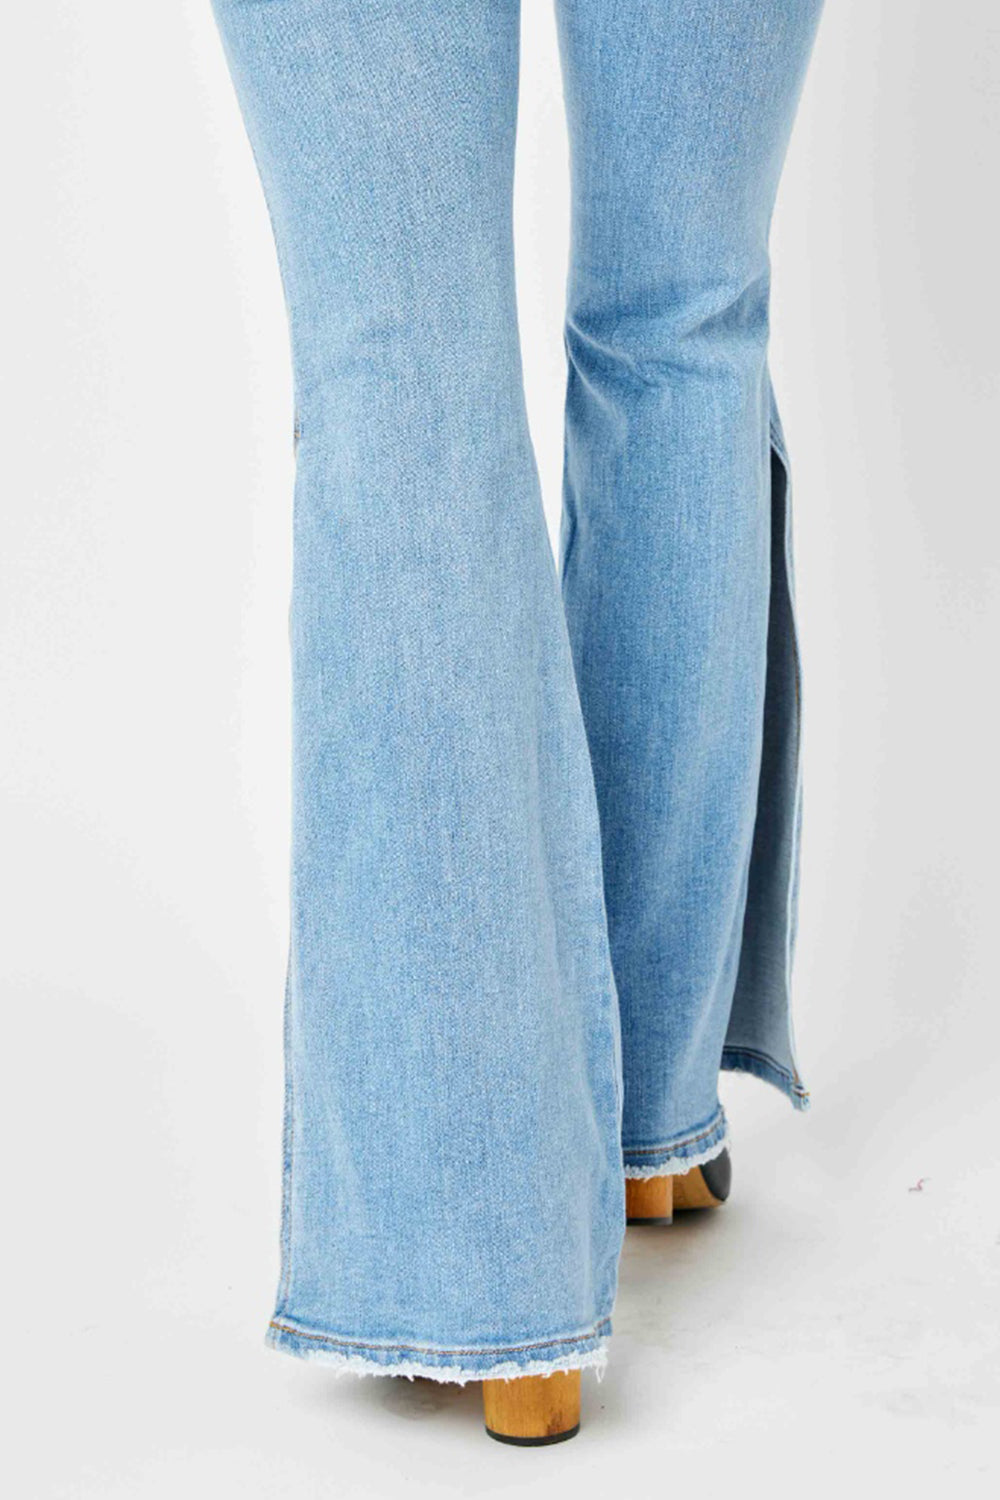 Judy Blue Medium Wash Mid Rise Raw Hem Slit Flare Jeans Trendsi